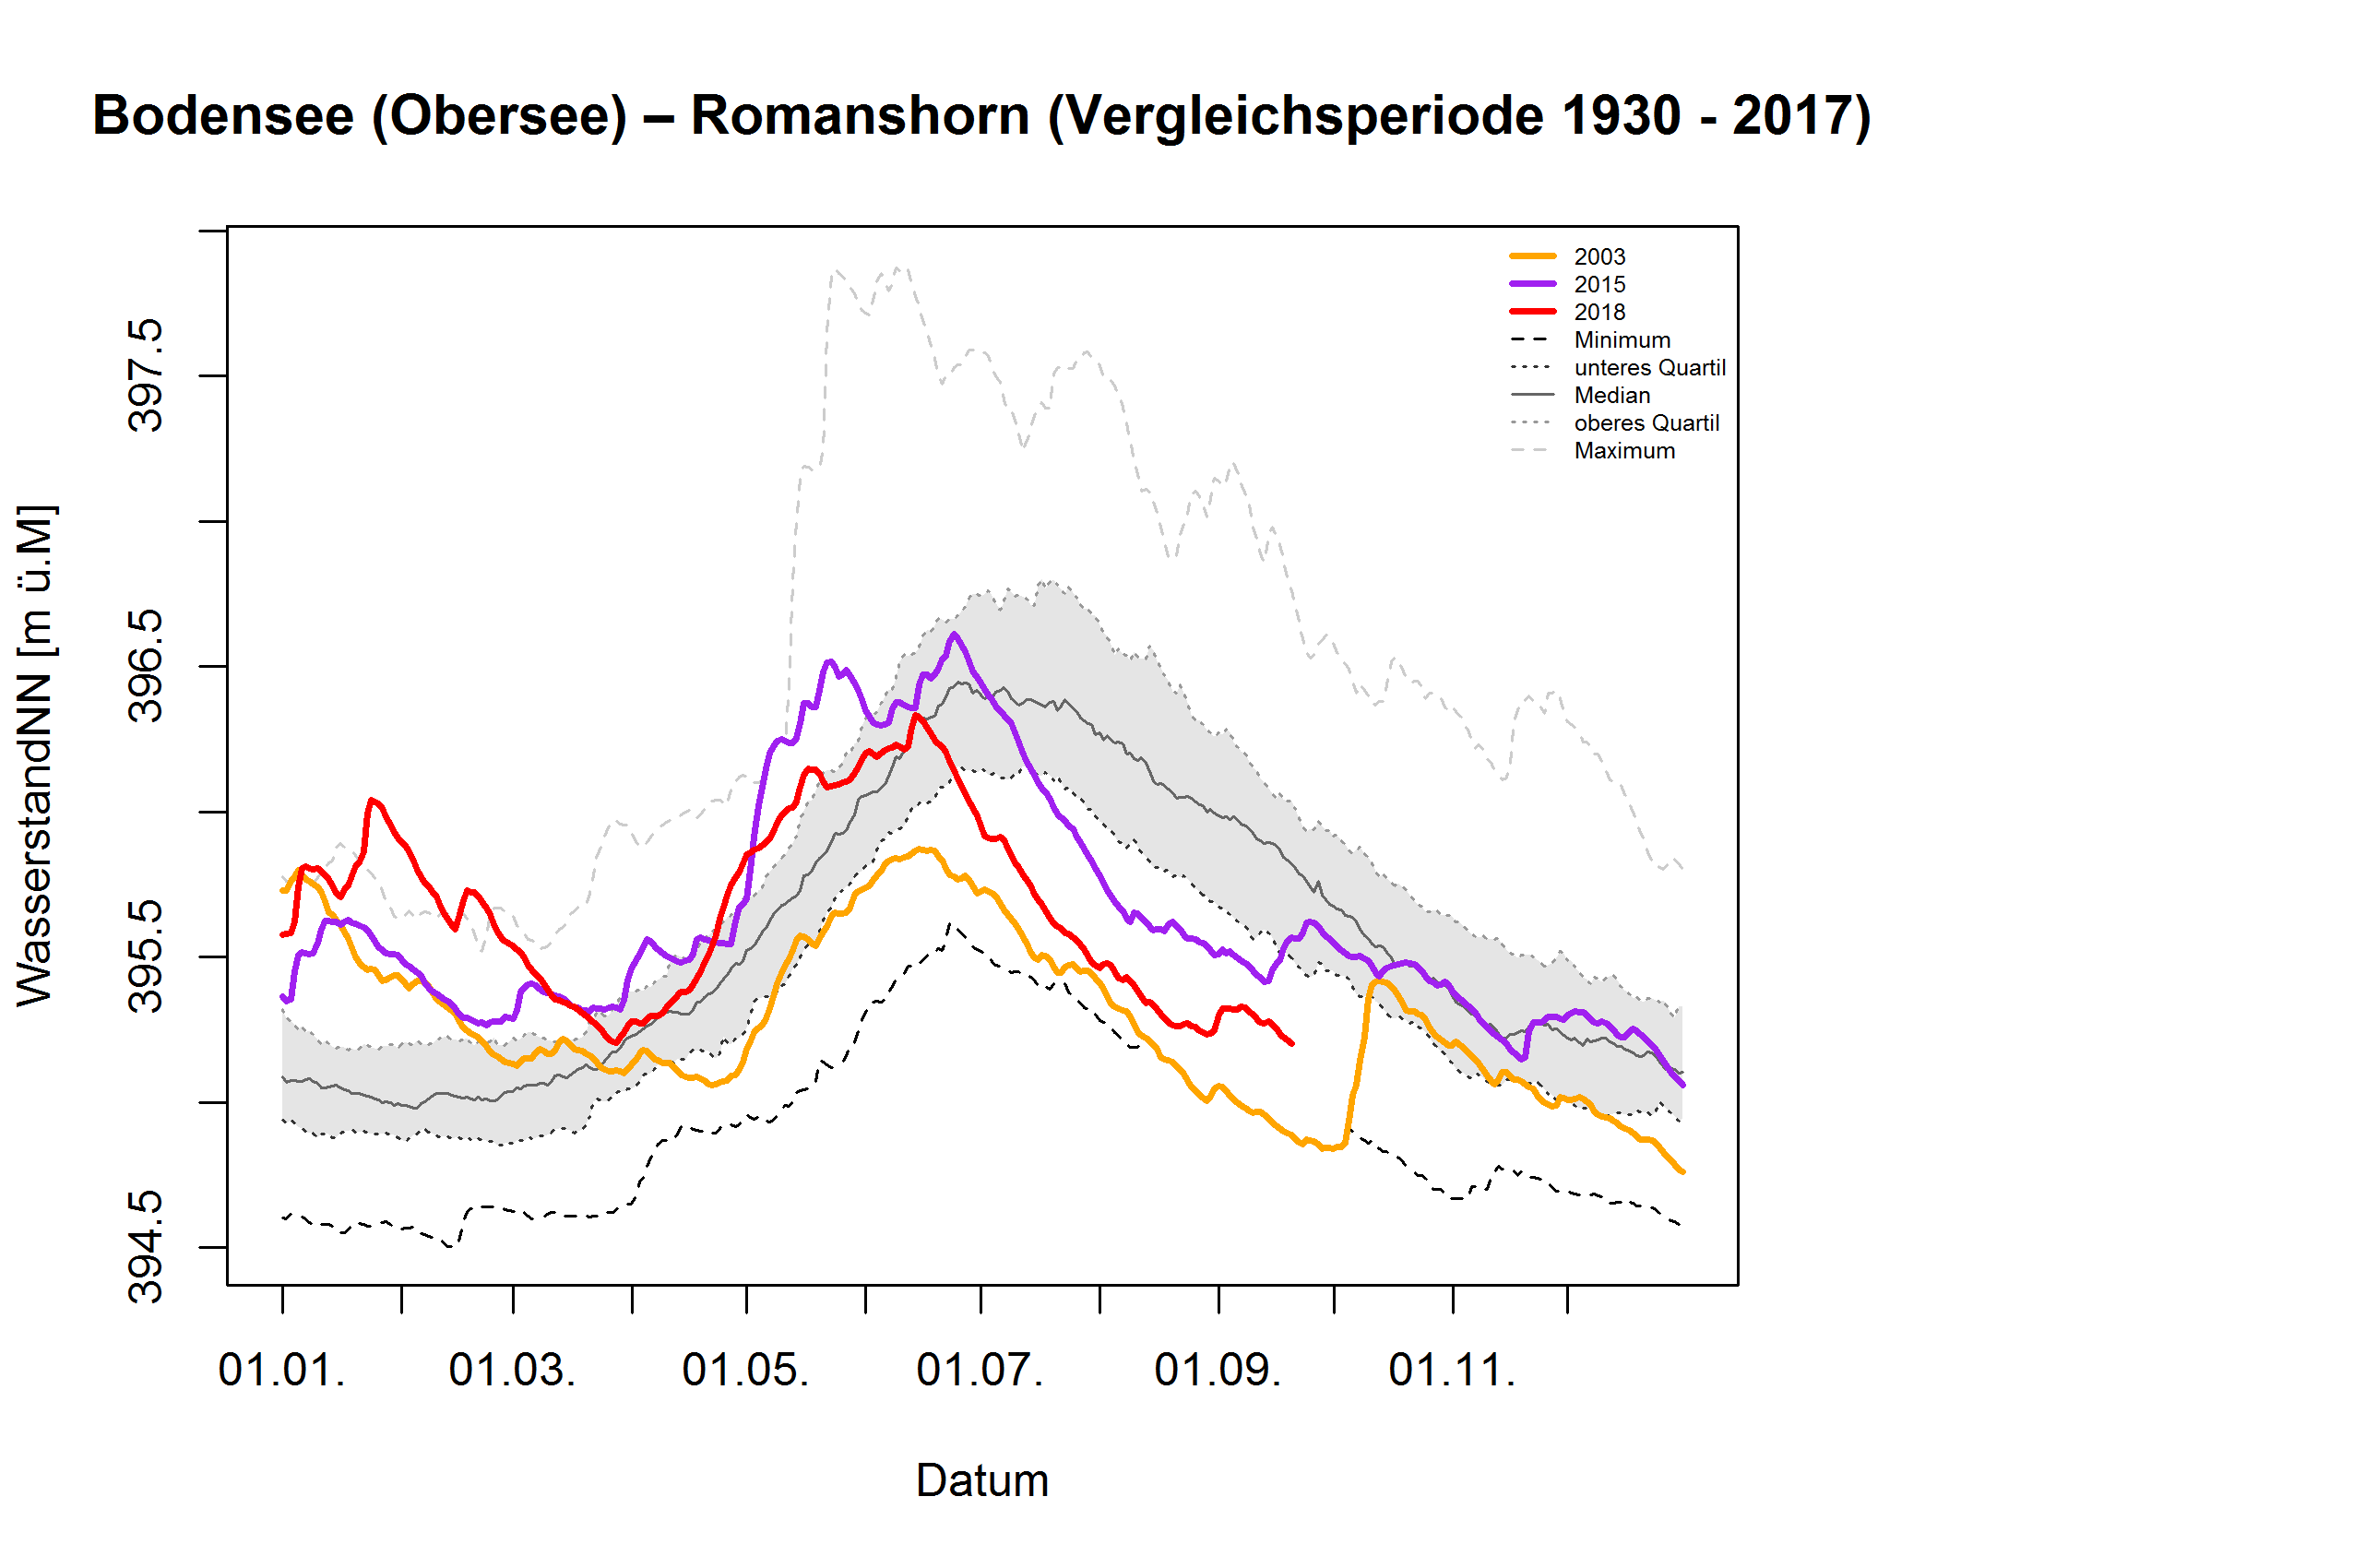 Bodensee (Obersee) - Romanshorn: Vergleichsperiode 1930 - 2017